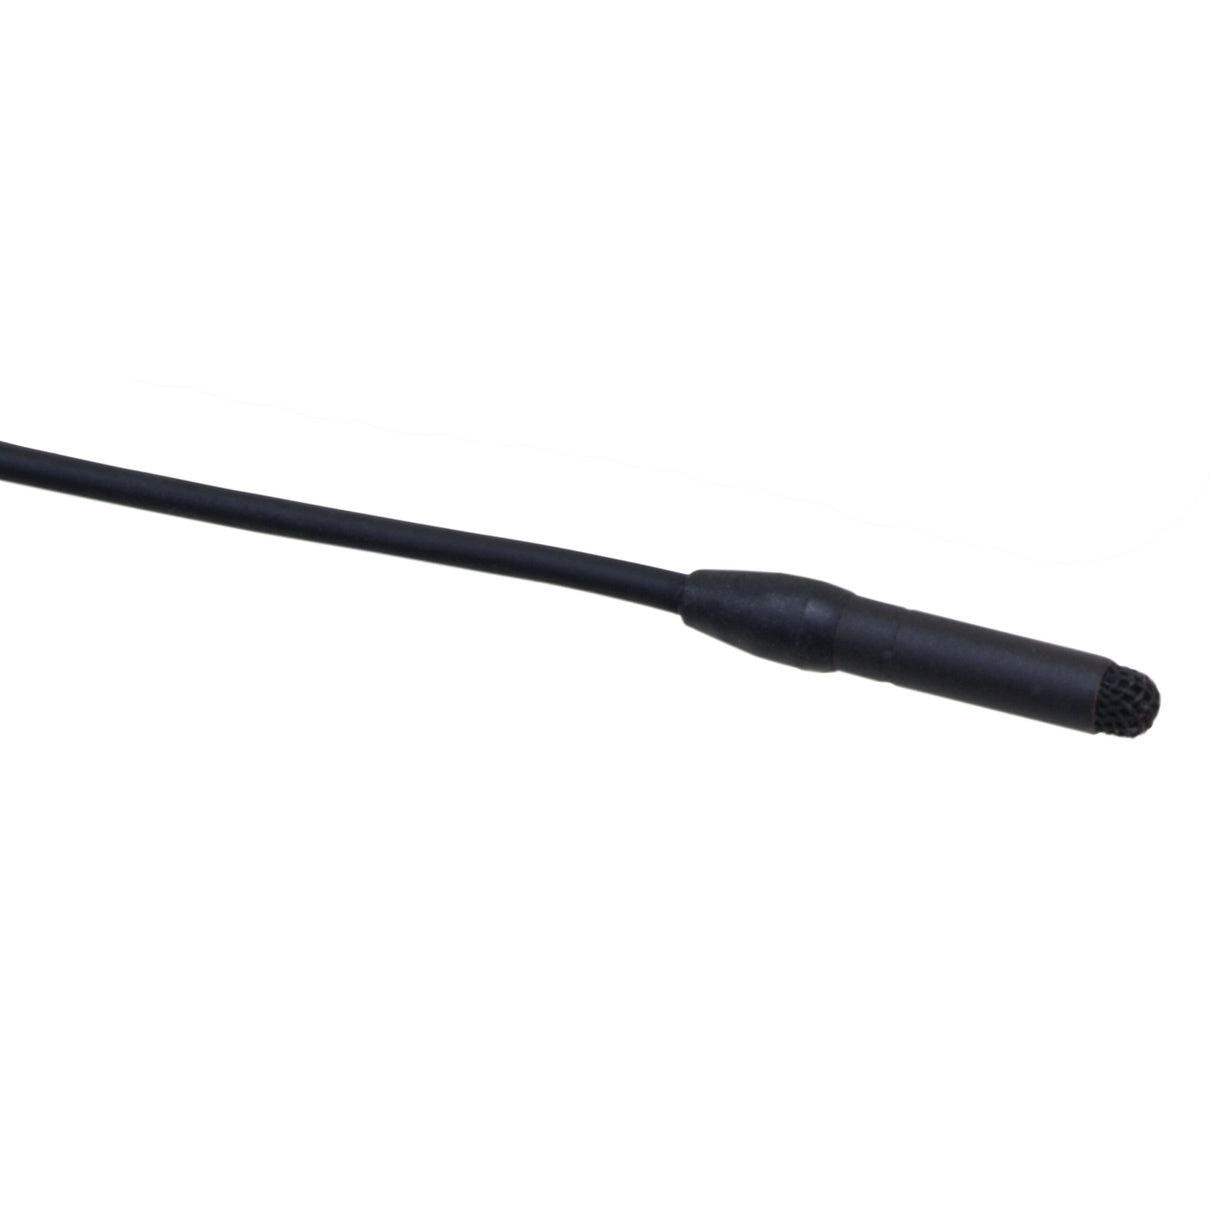 Sanken COS-11D-PT-RM-AL-1.8-BK Omnidirectional Lavalier Microphone without Accessories, Black, Pigtail, Reduced Sensitivity, 1.8m Stripped Cable